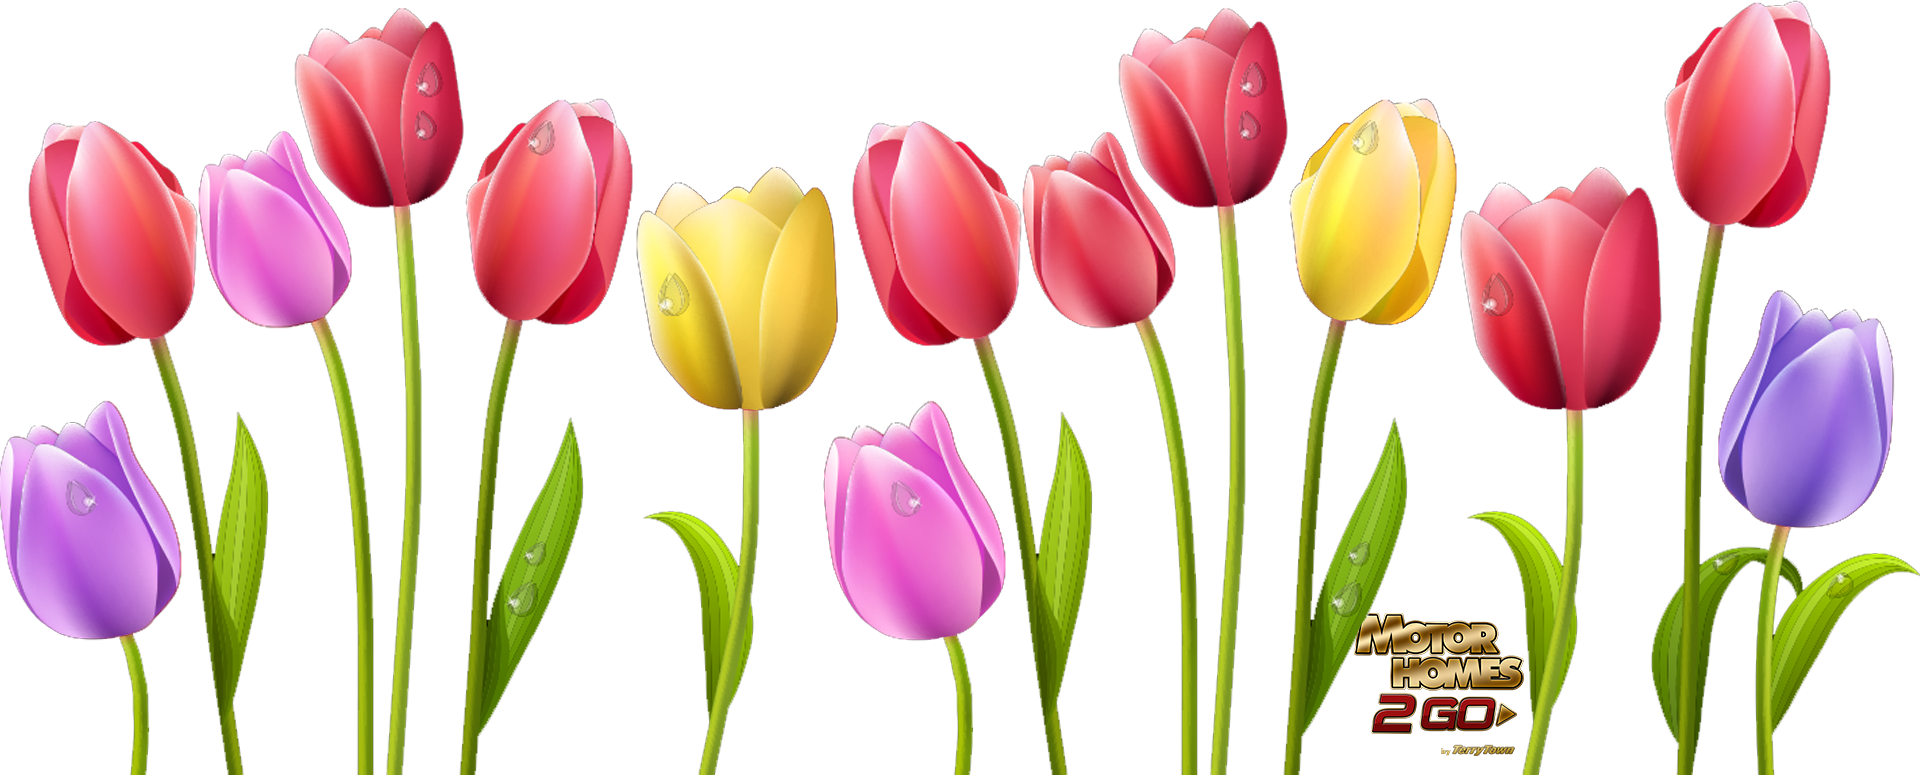 Clipart flower tulip. Jokingart com 